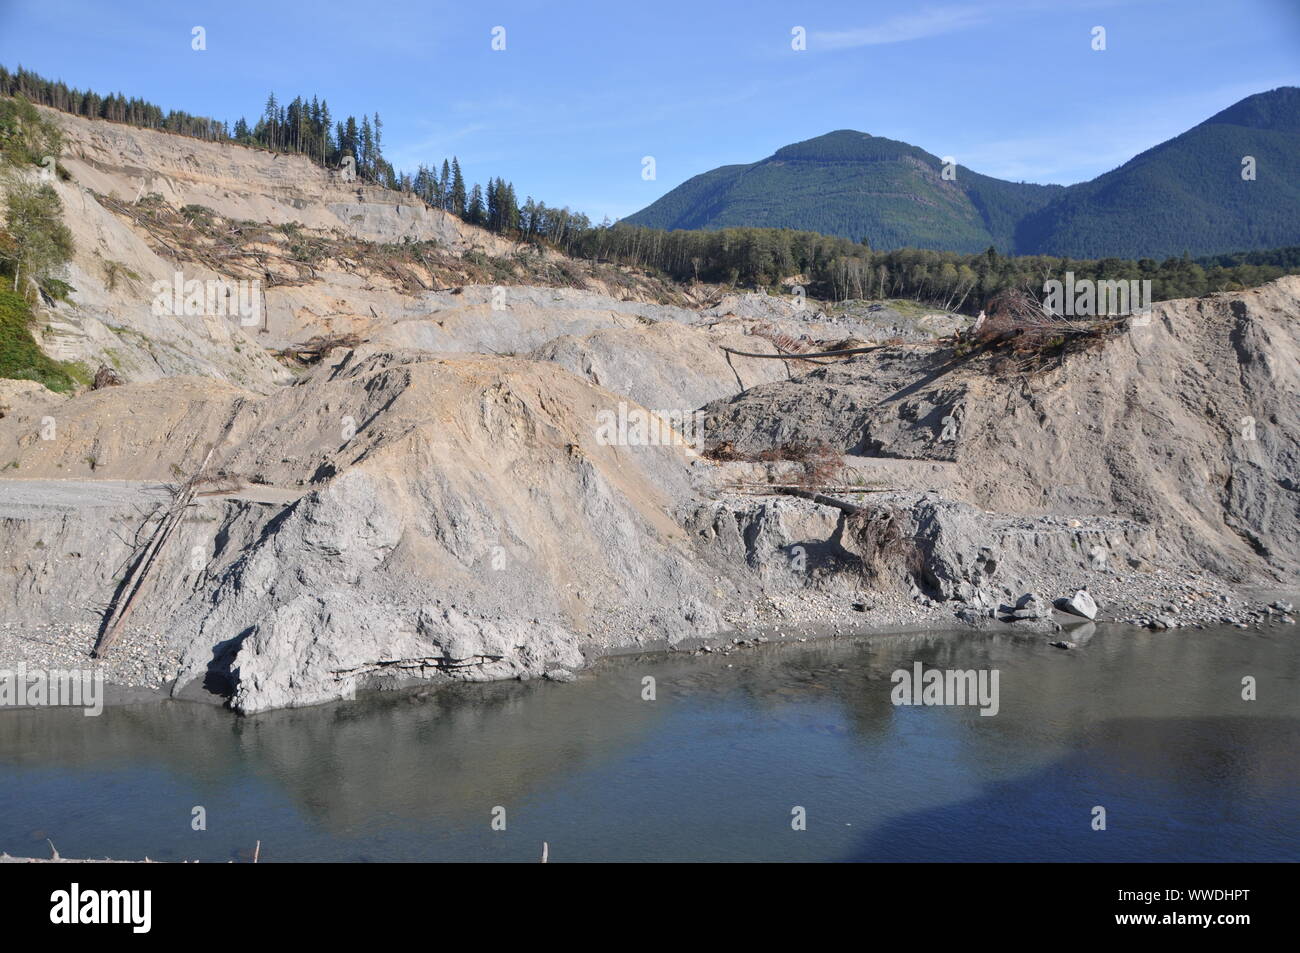 2014 Oso Landslide and the North Fork Stillaguamish River, Snohomish County, Washington, USA Stock Photo